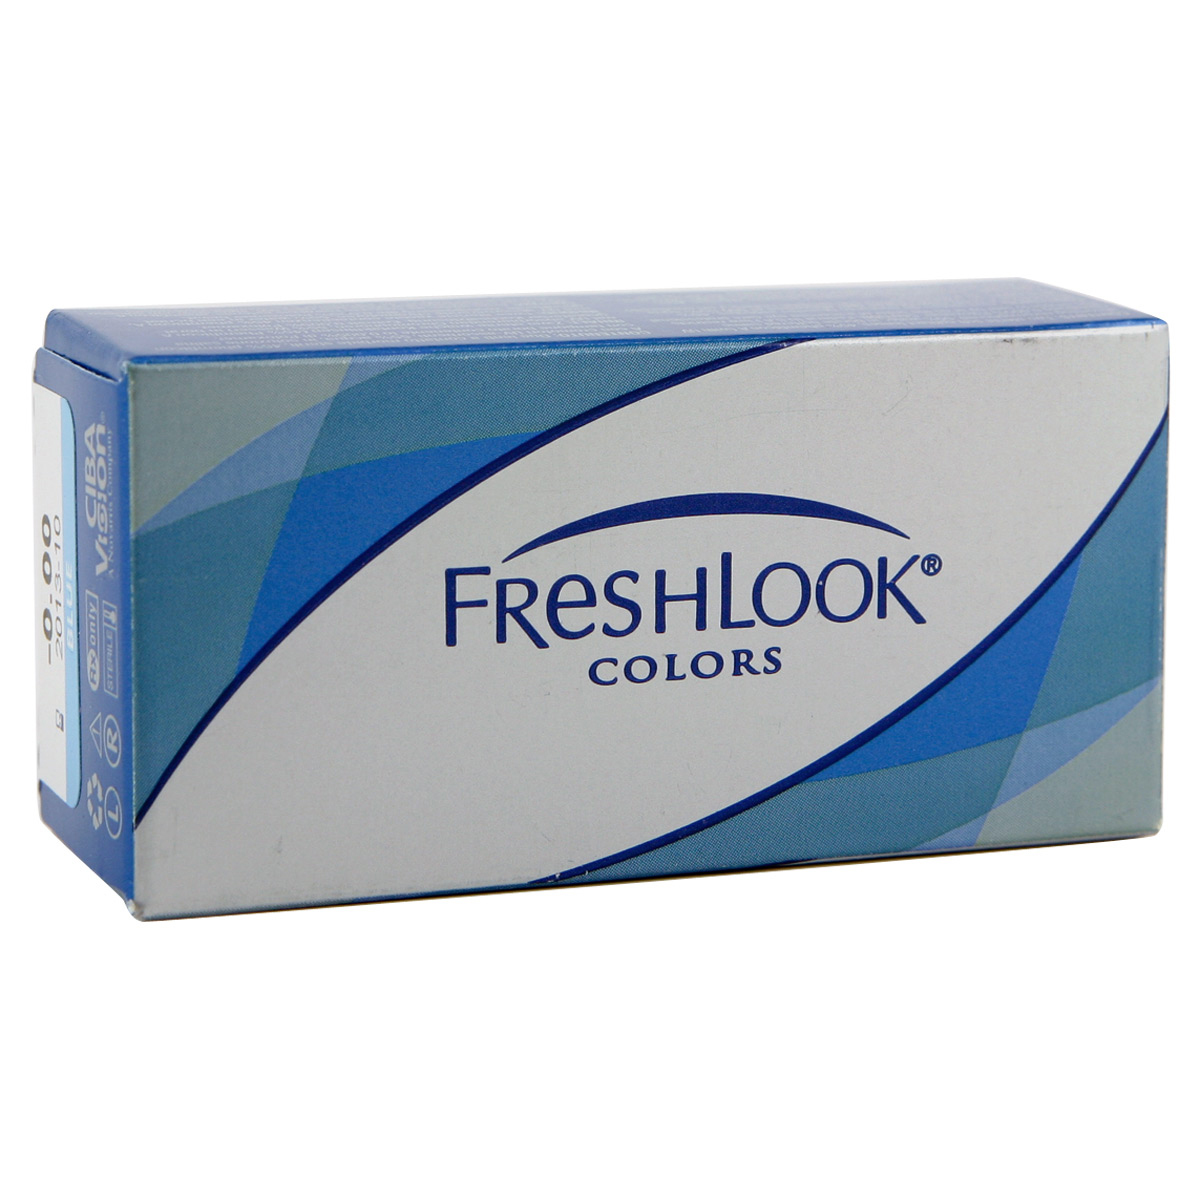 Image of Freshlook Colors 2 lenses